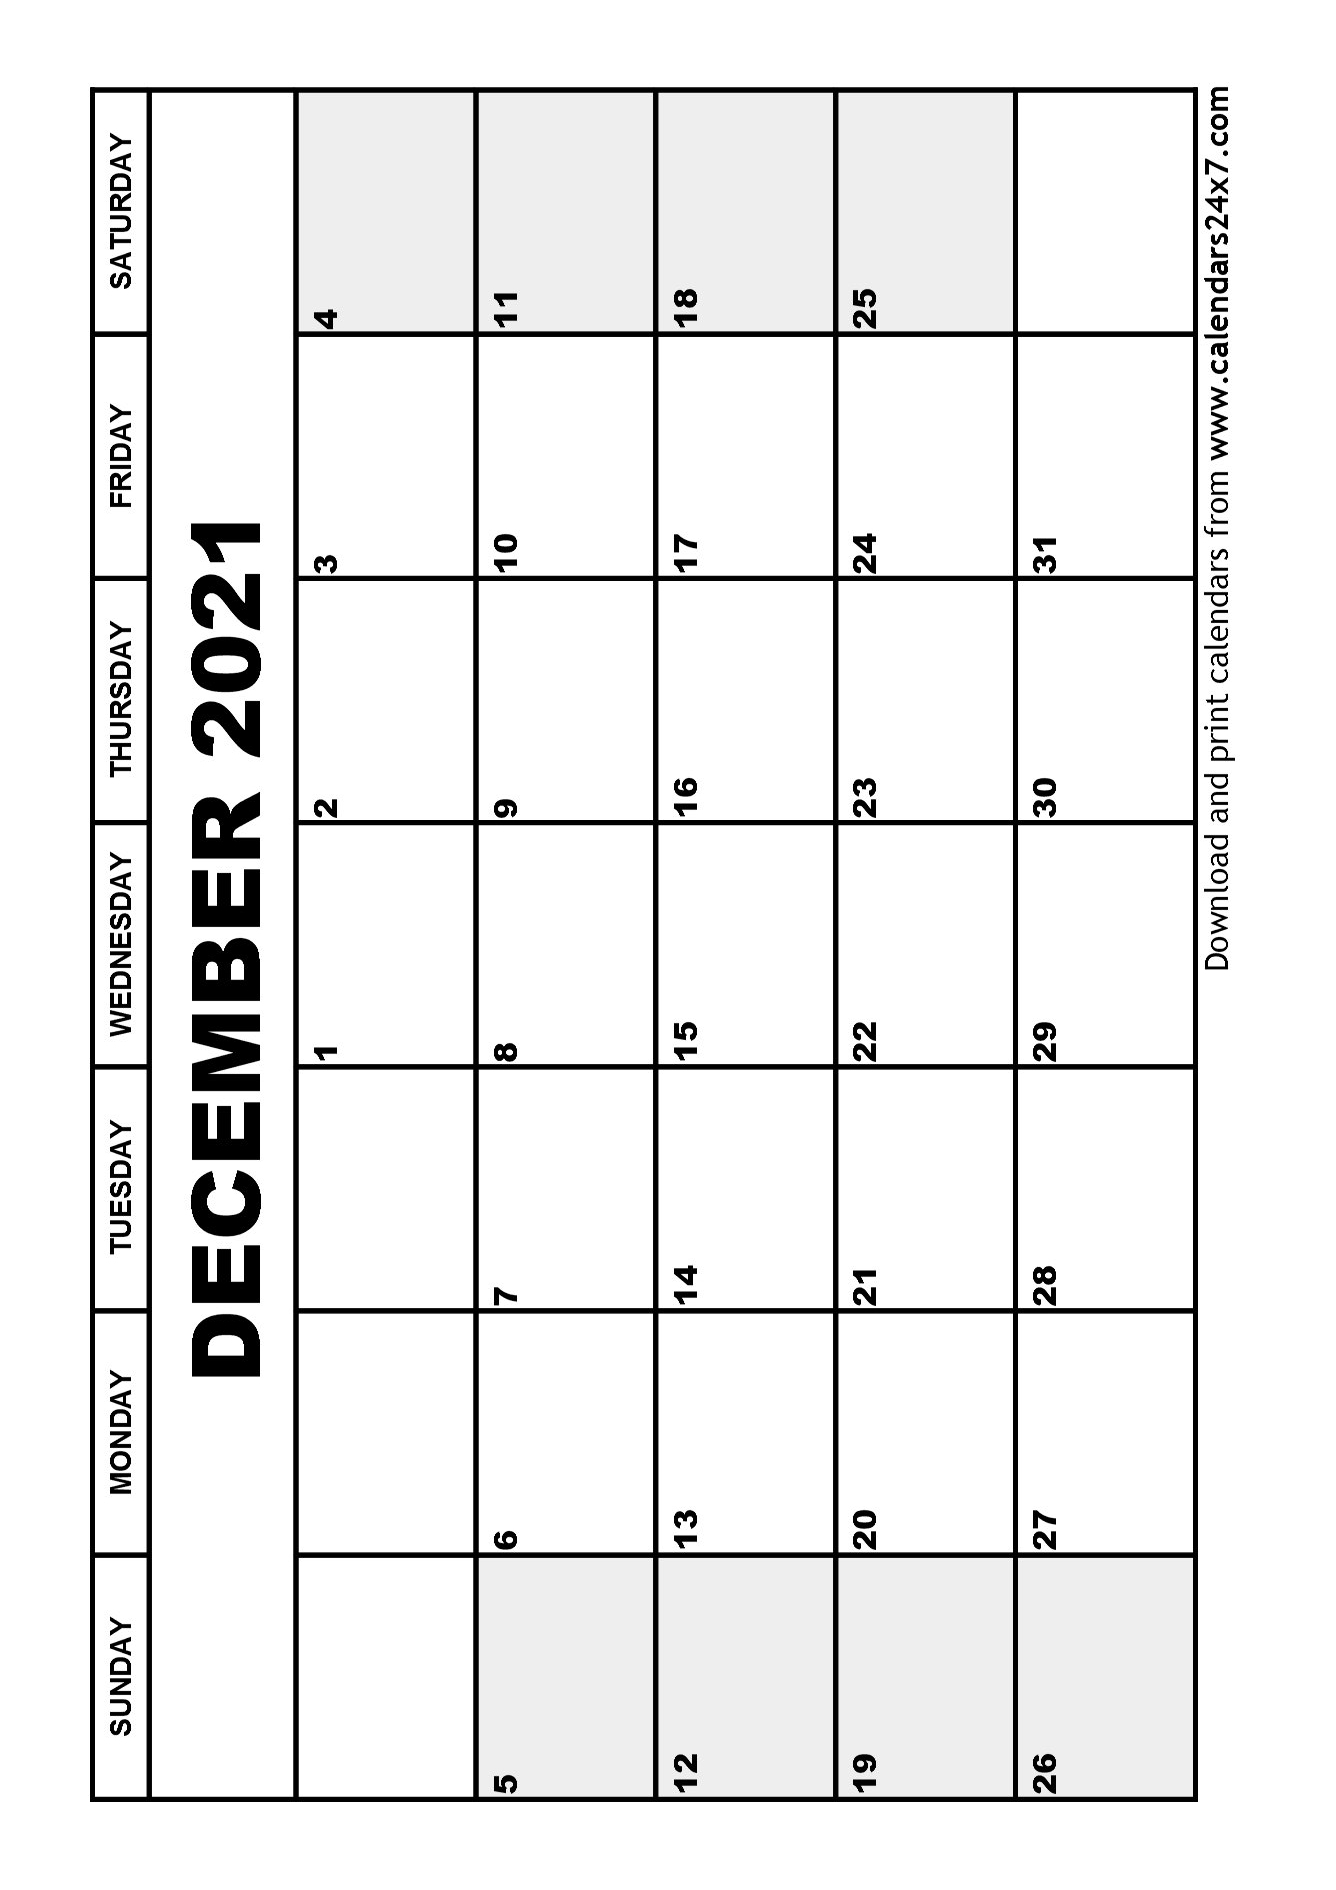 December 2021 Calendar &amp; January 2022 Calendar